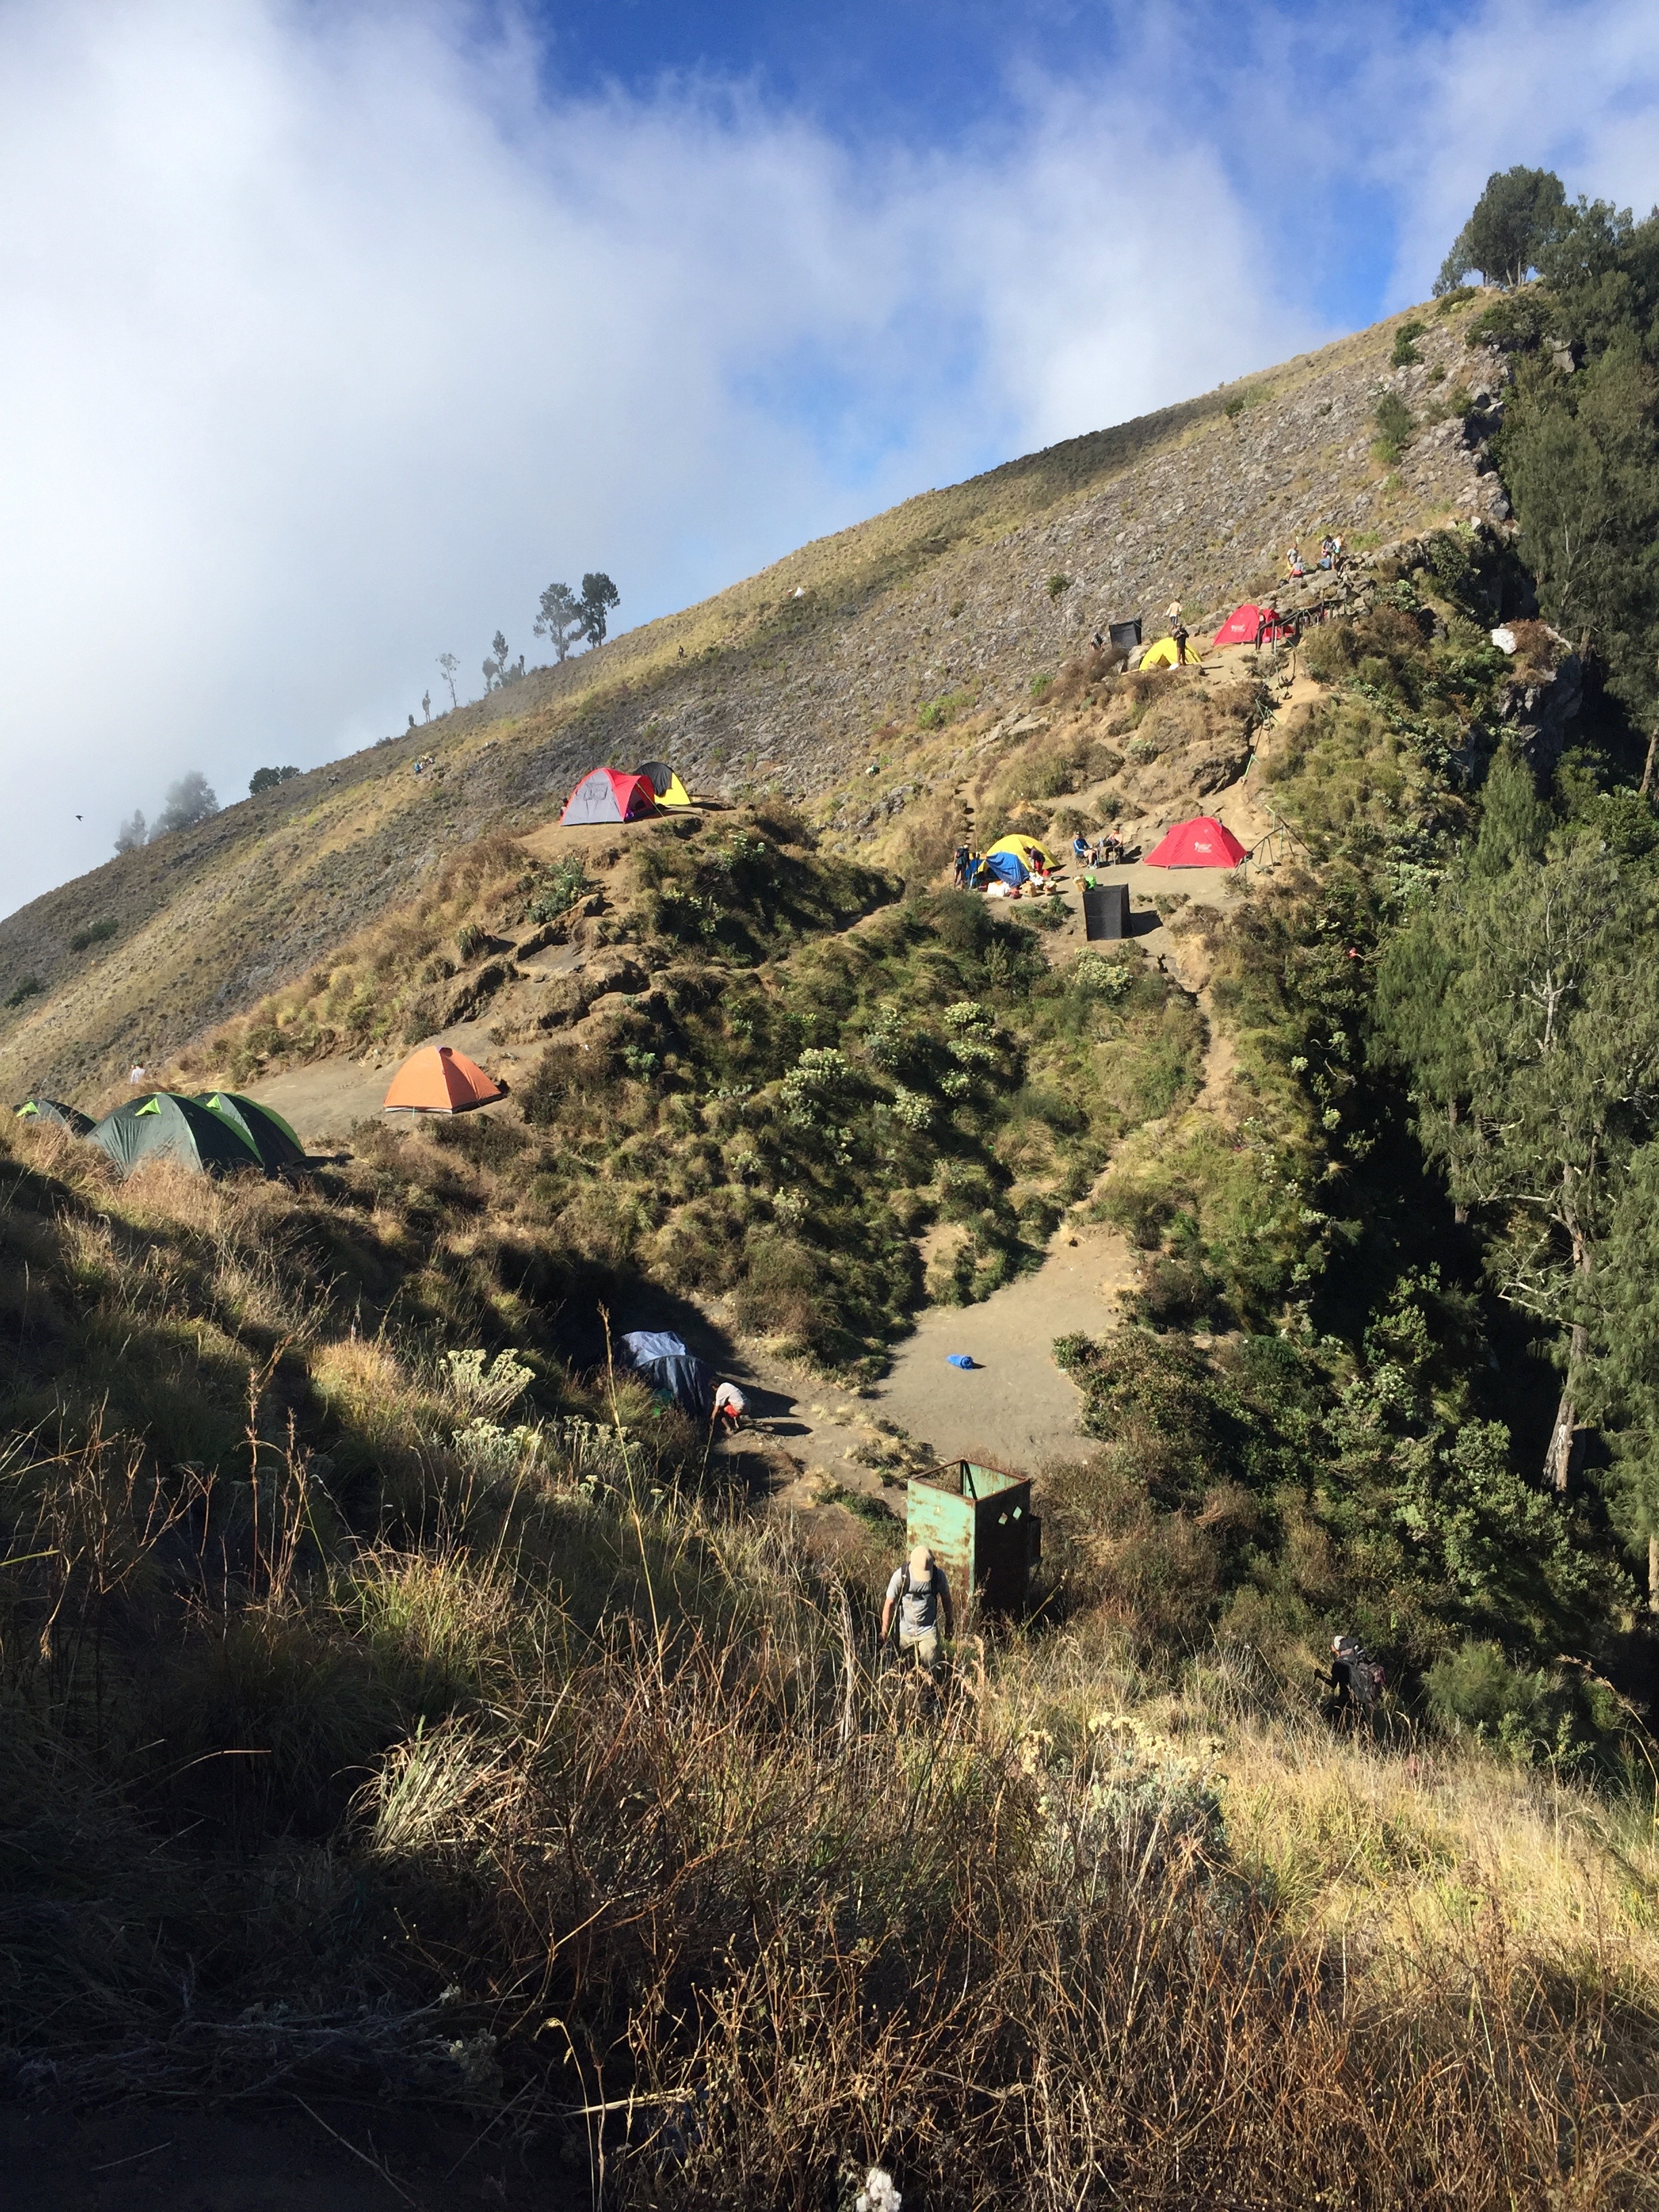 tents at the crater rim